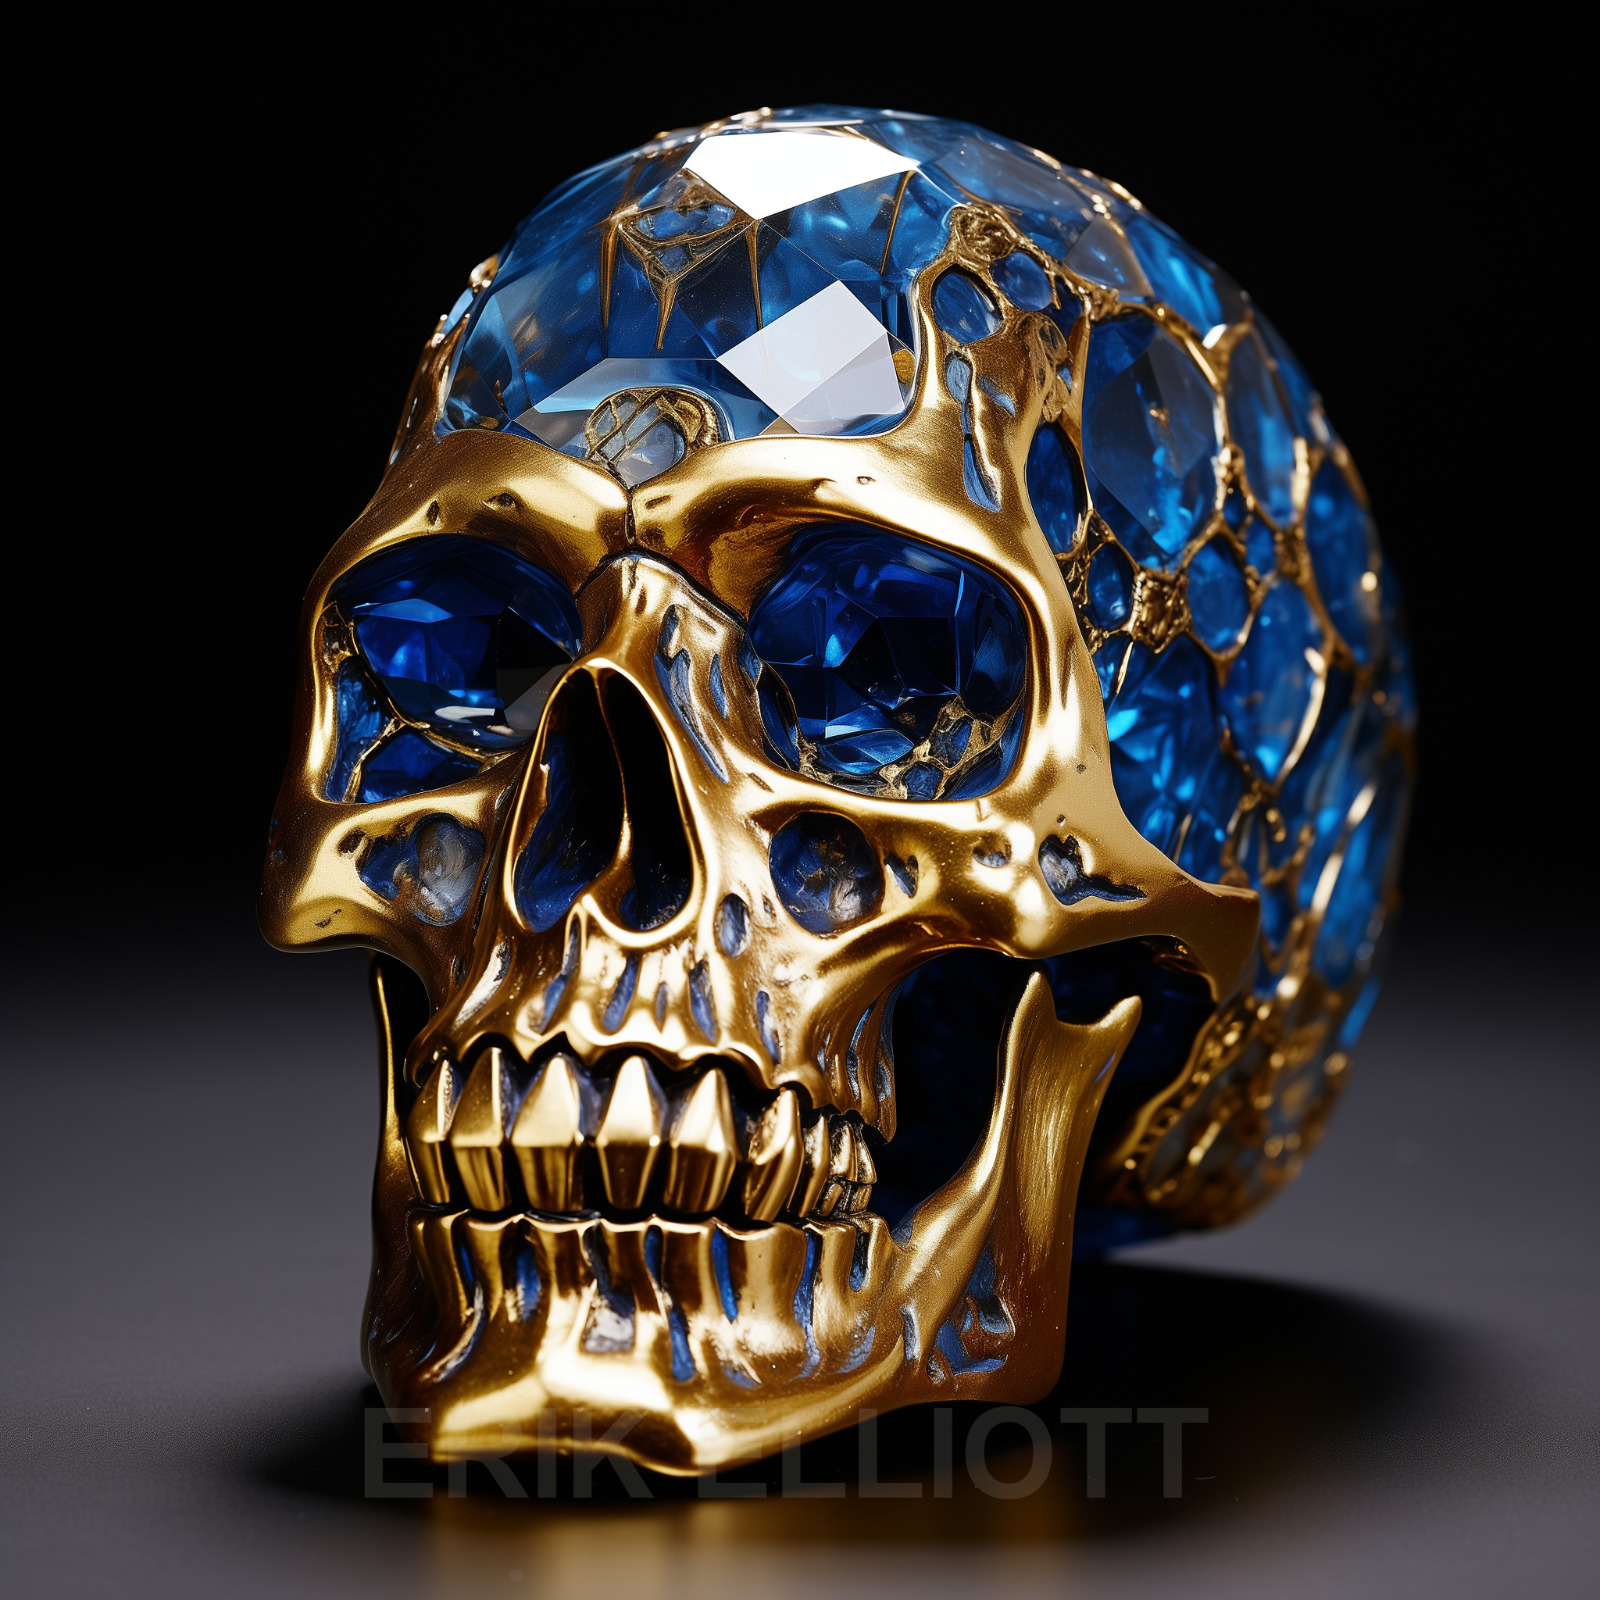 Signed Fine ART PRINT / 8x8 / Captivating Gold Skull Photography Artistic Photo